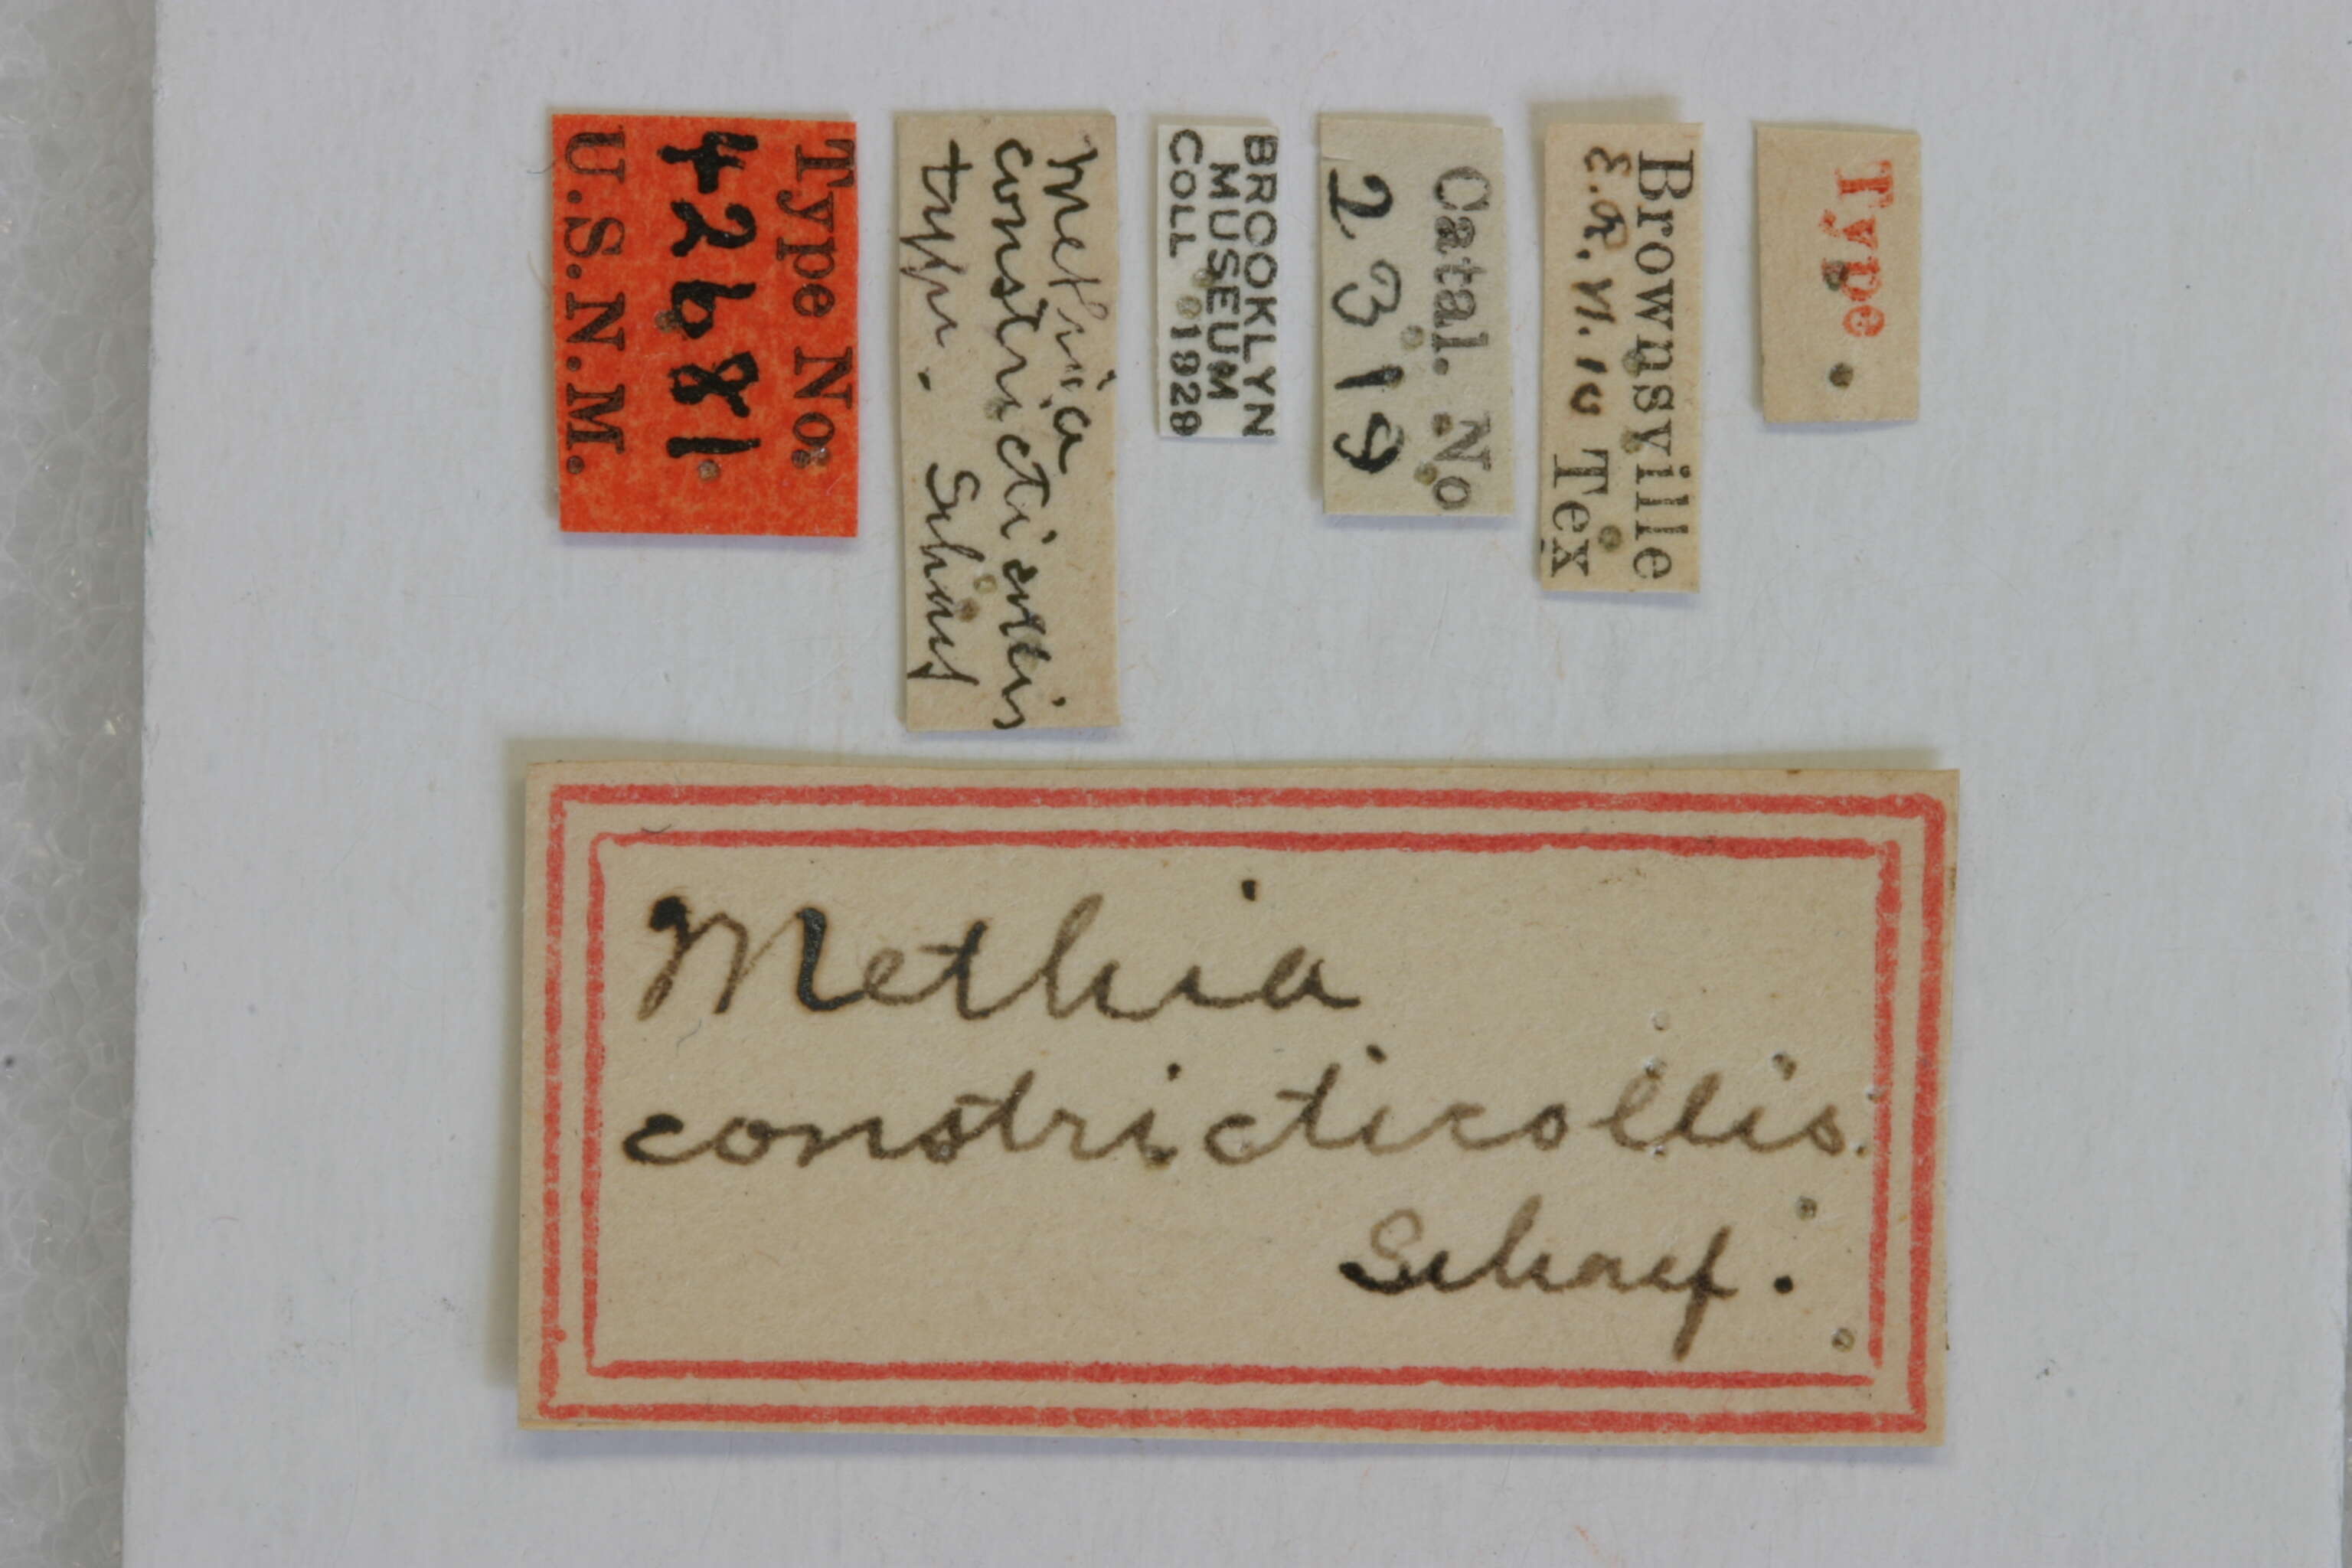 Image of Methia constricticollis Schaeffer 1908